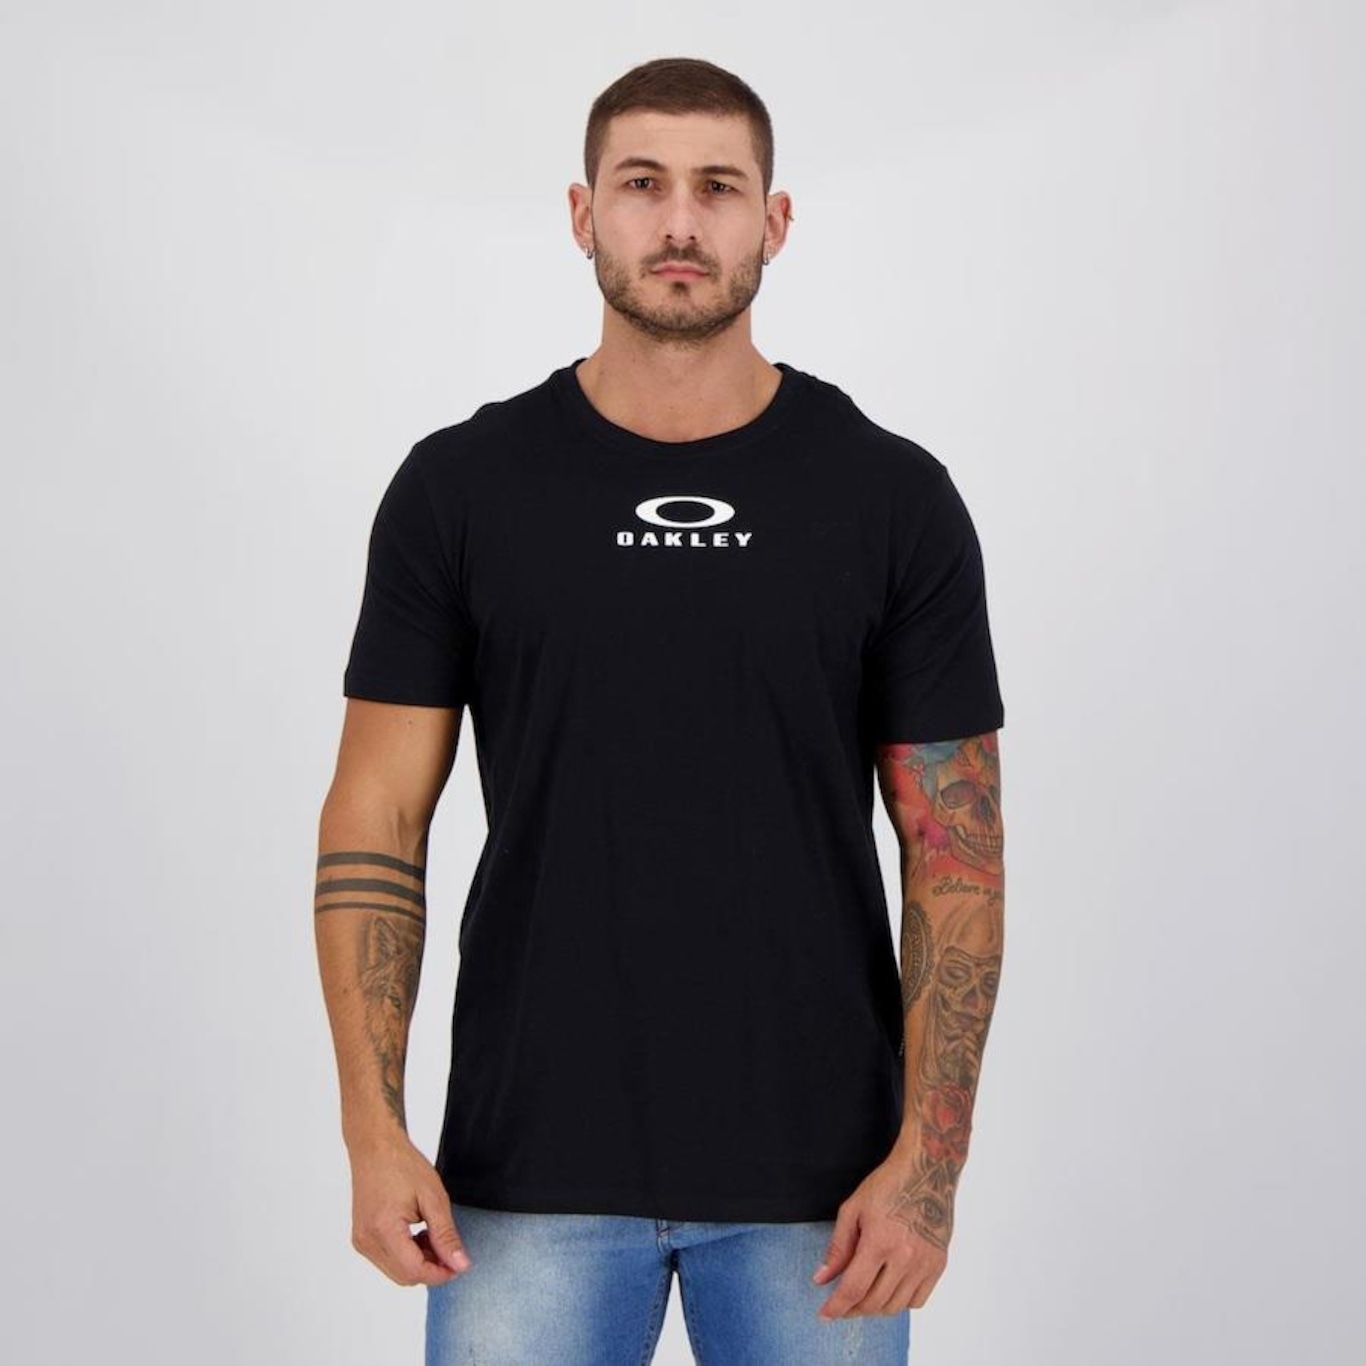 Camiseta Oakley Bark Tee Masculina - Foa403288-40z